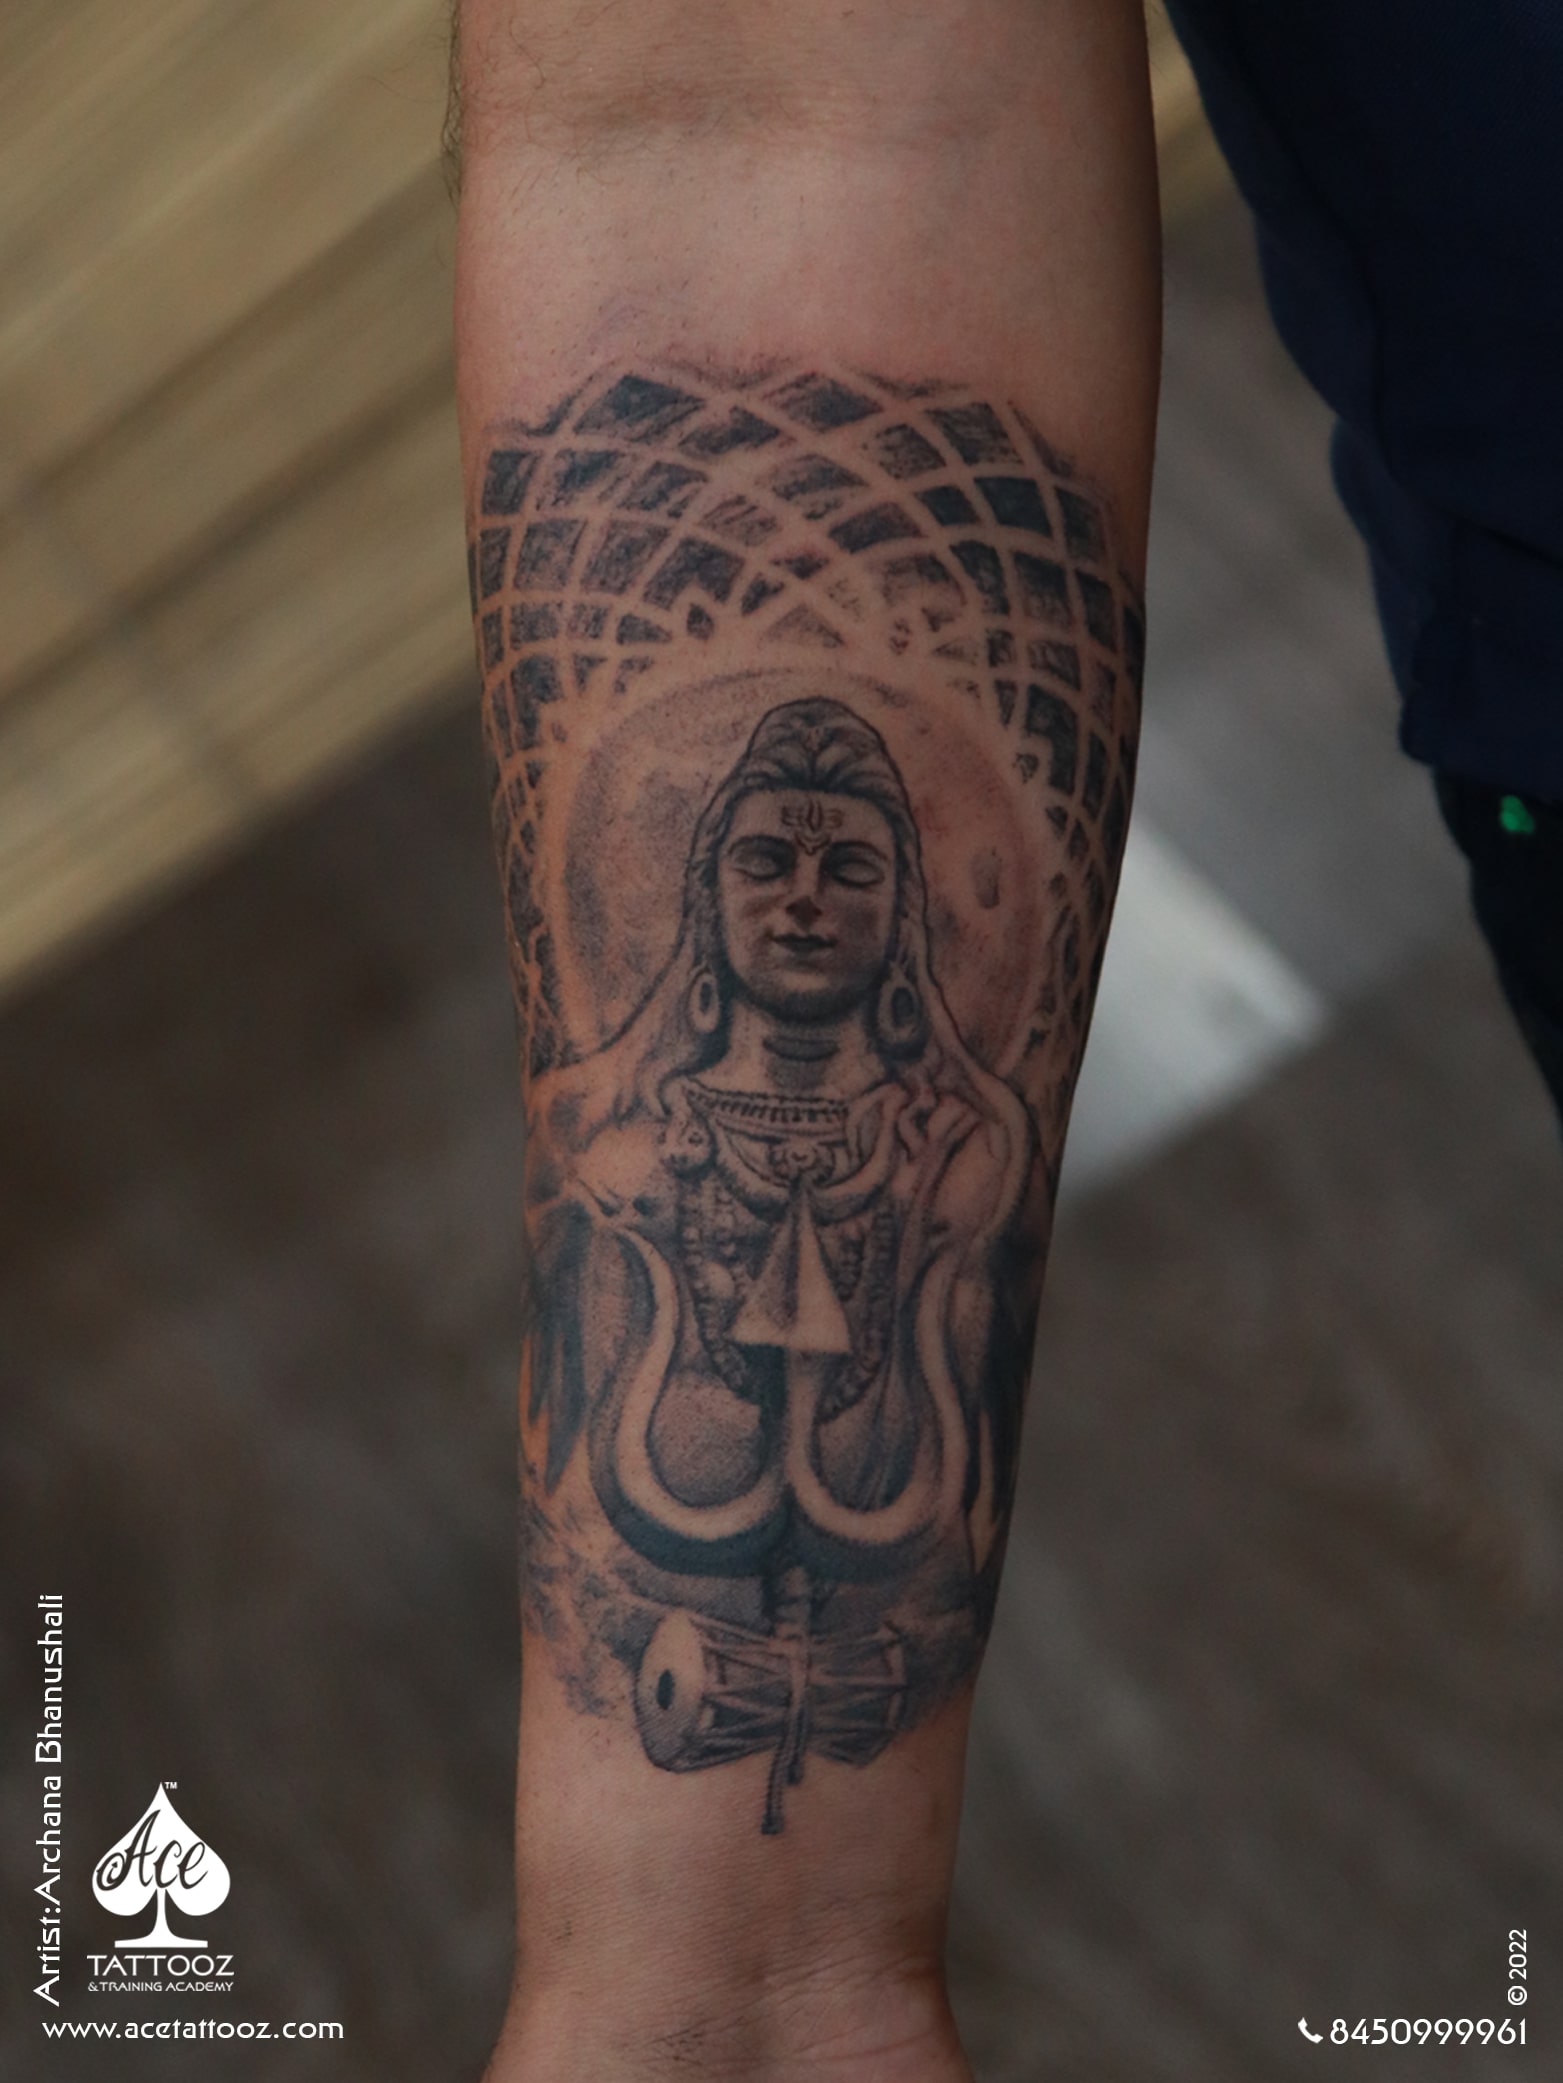 Tattoo uploaded by Vipul Chaudhary • Mahadev tattoo |Shiva tattoo |Lord  shiva tattoo |Mahadev tattoo design • Tattoodo